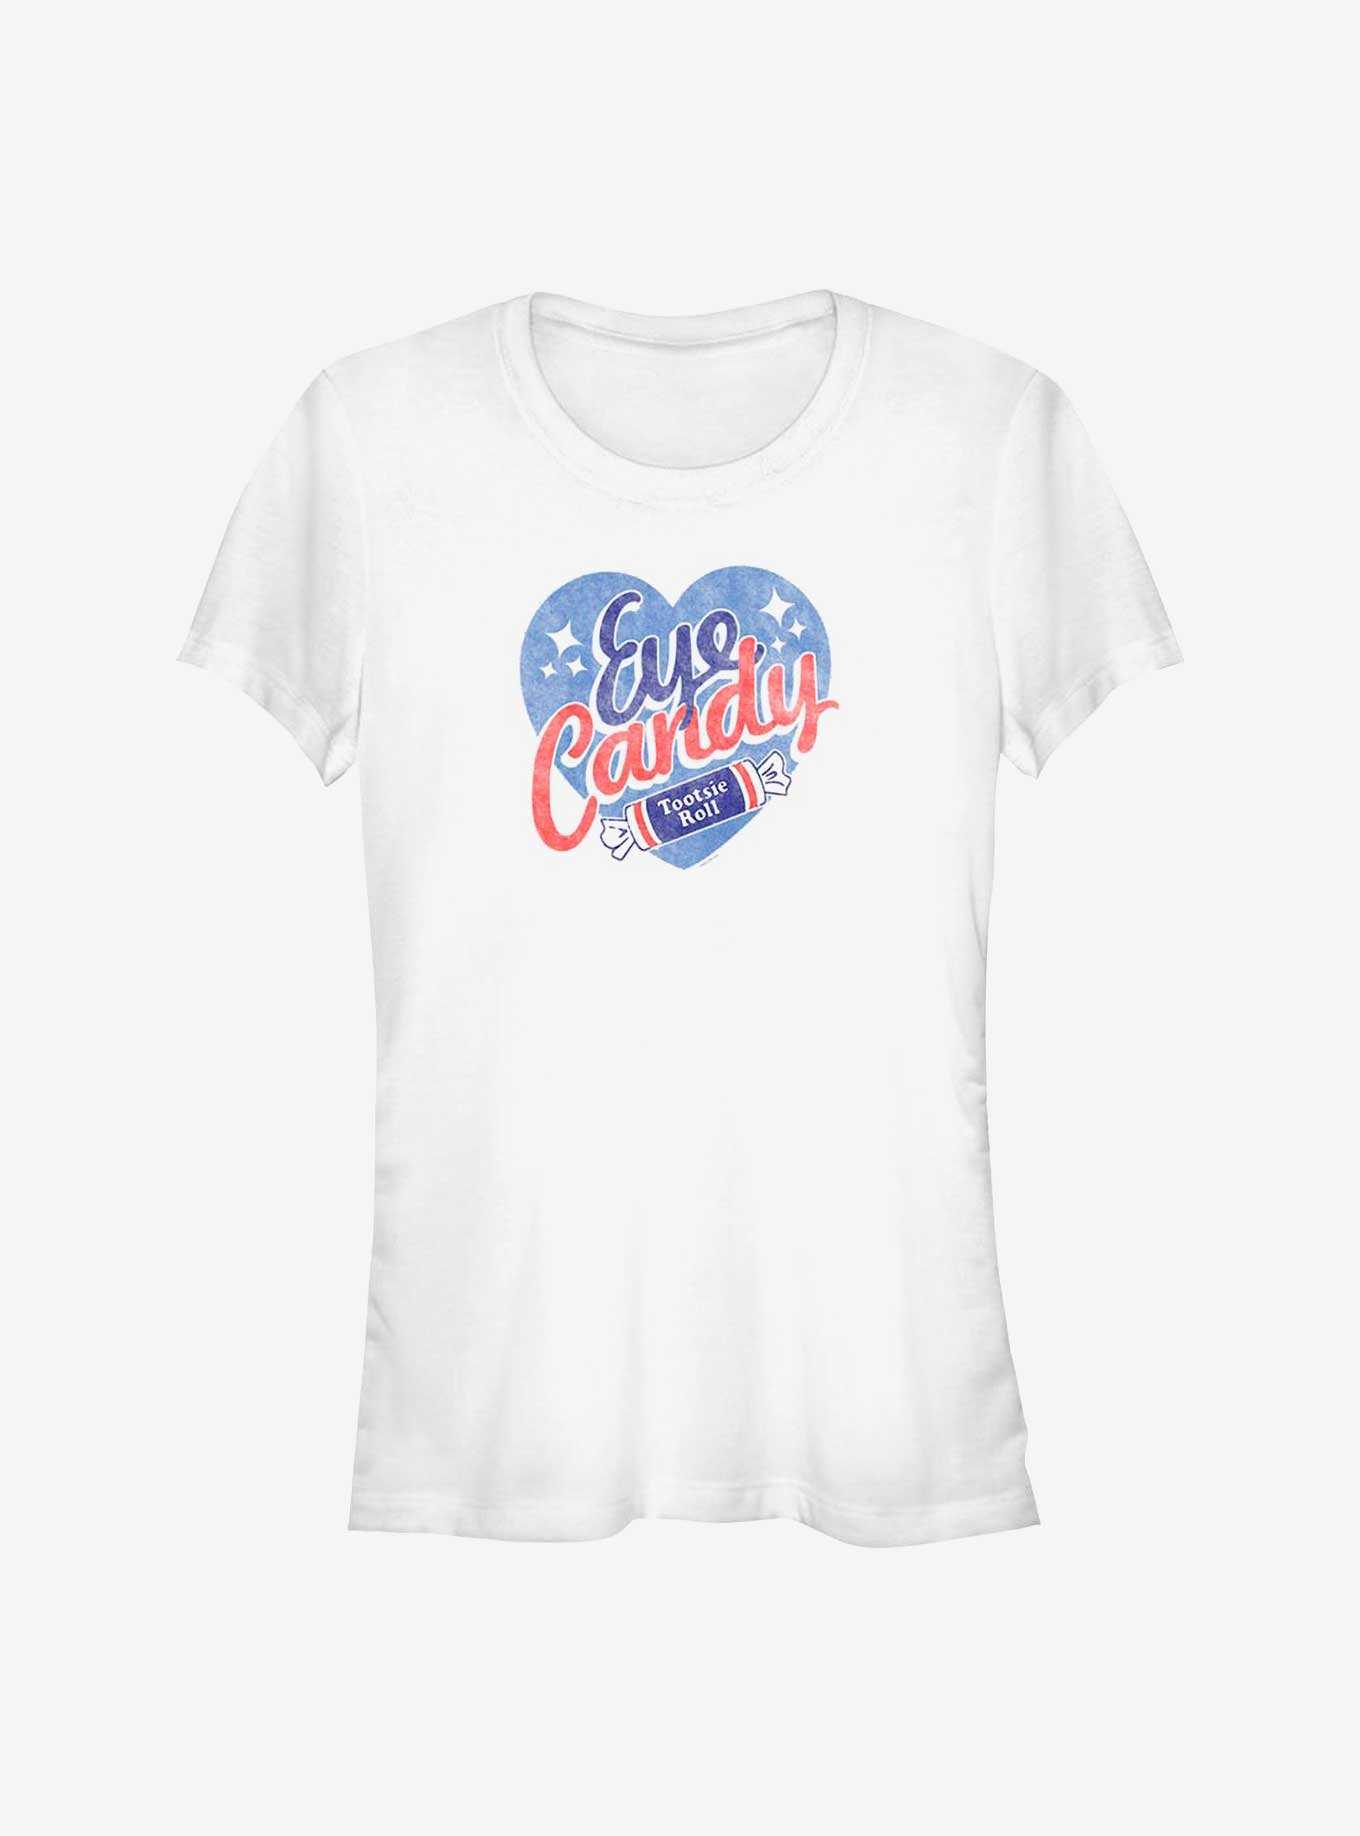 Tootsie Roll Eye Candy Girls T-Shirt, , hi-res